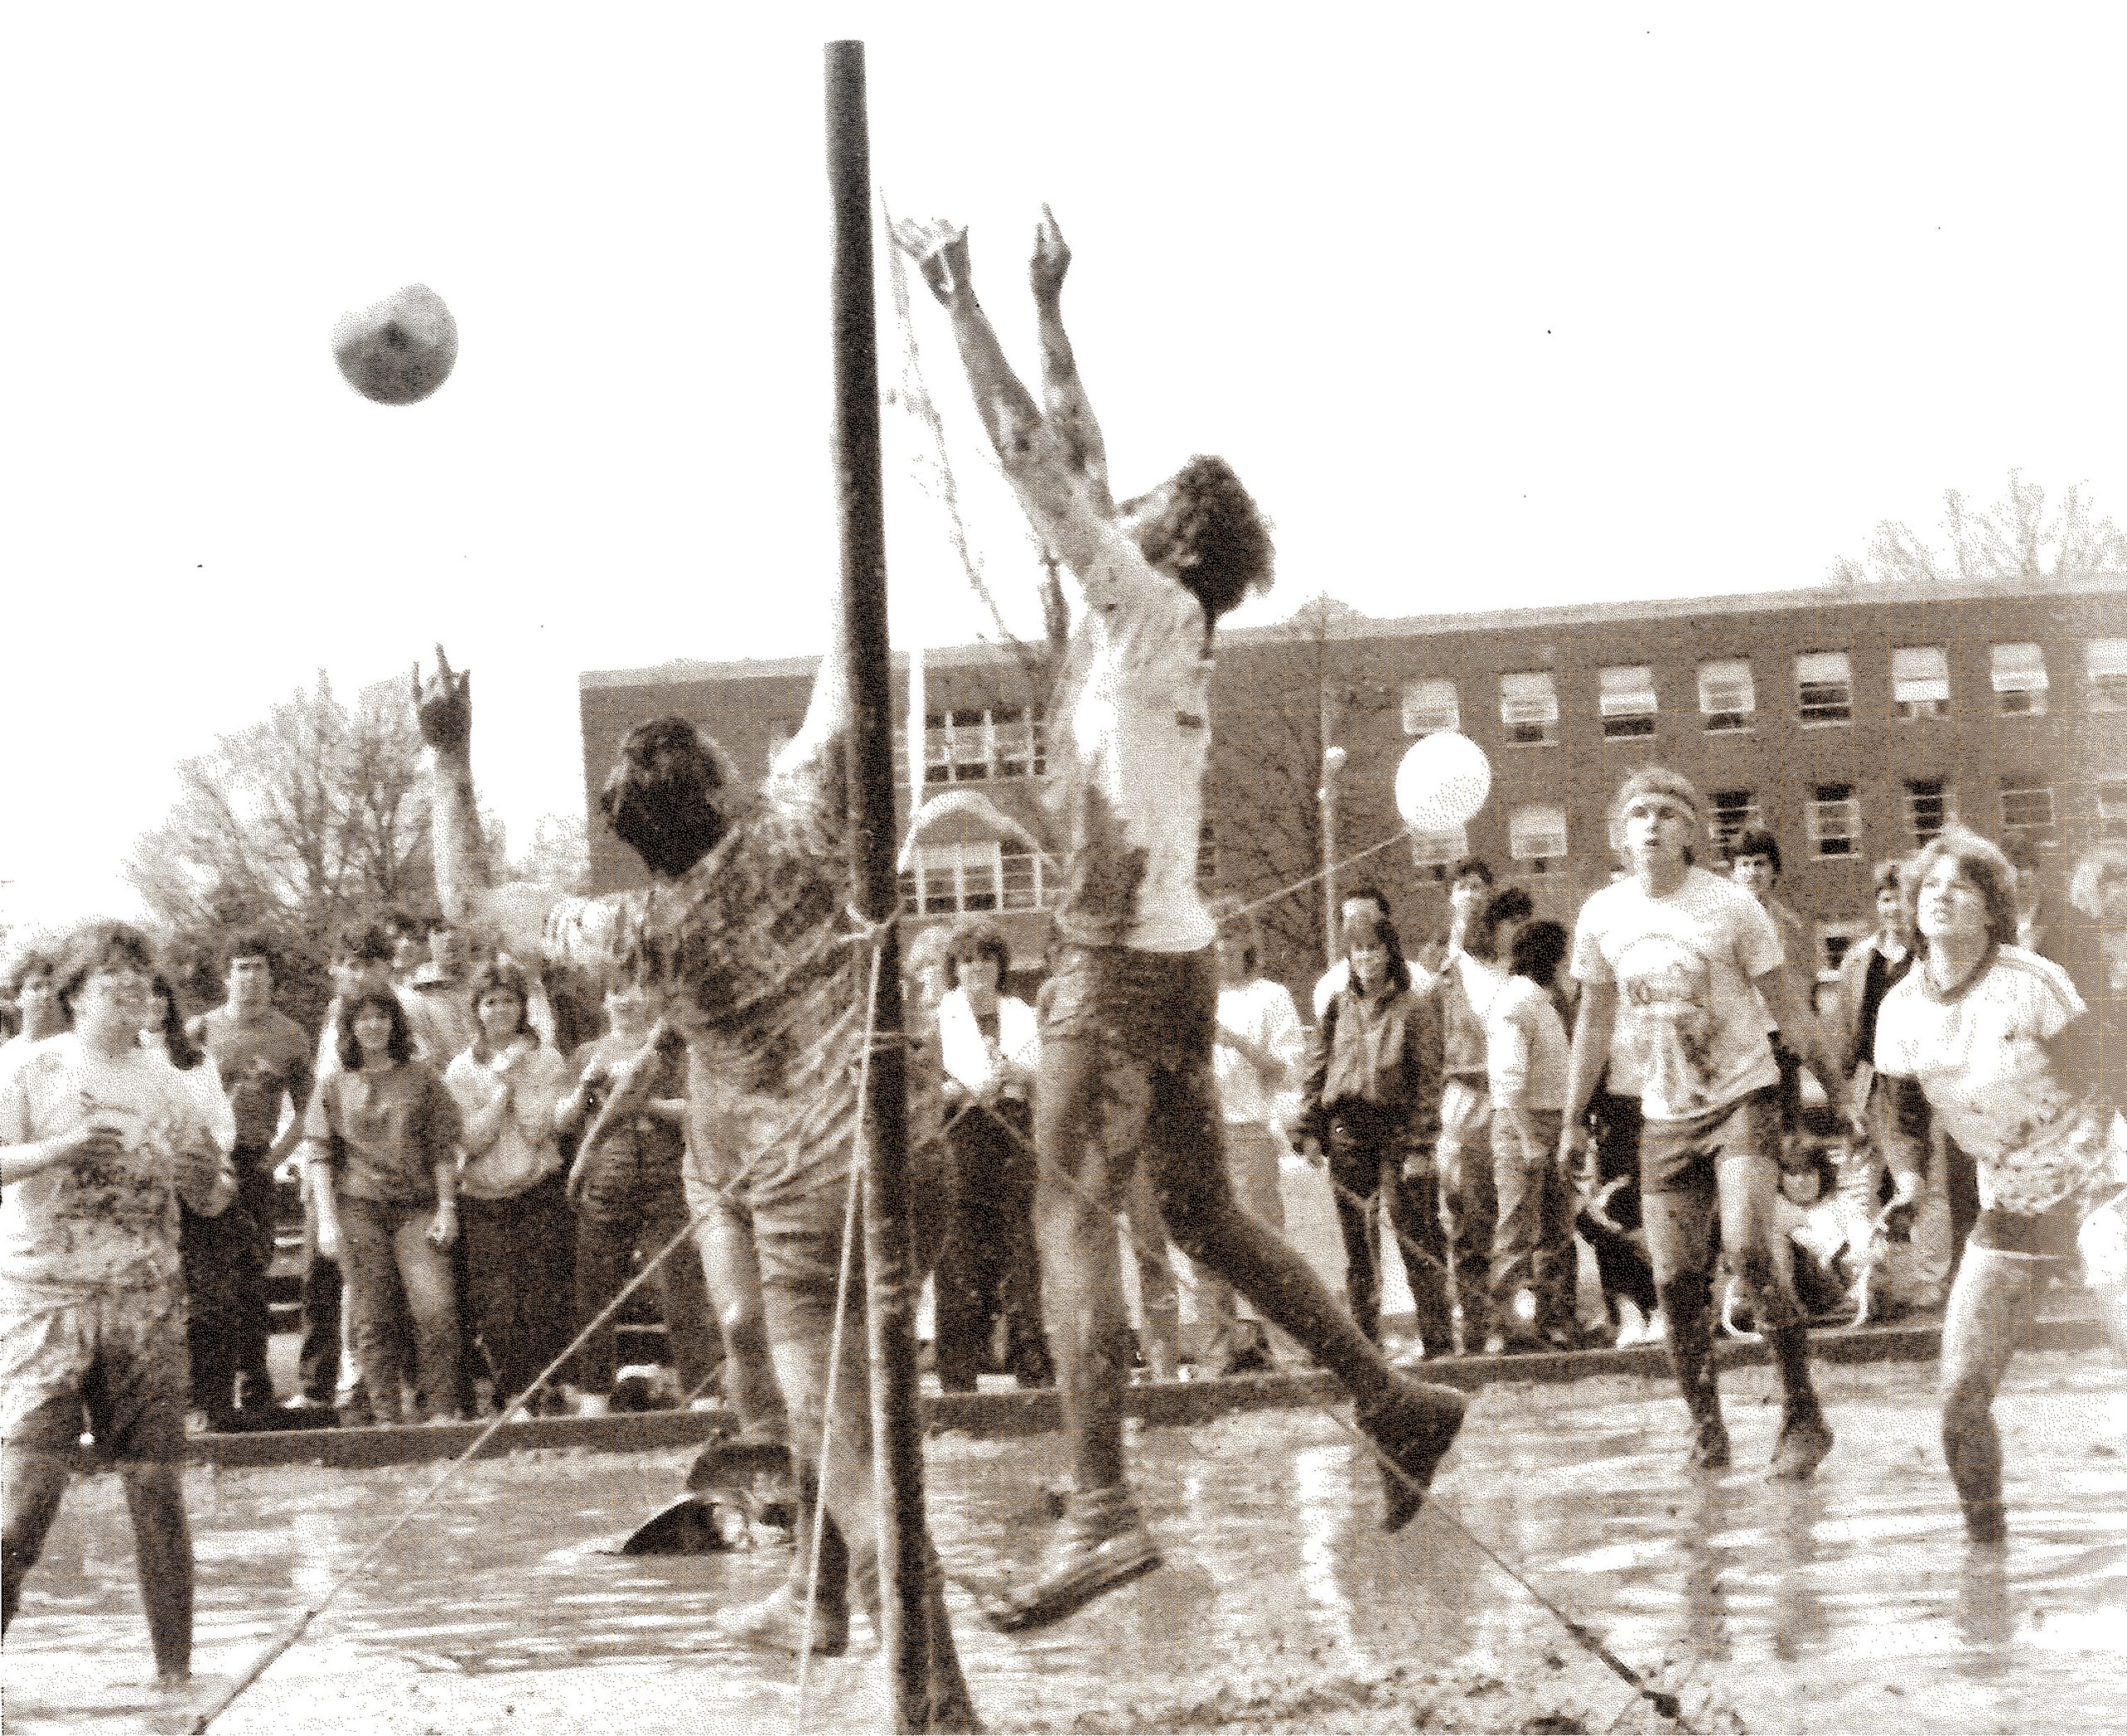 Oozeball tournament 1985